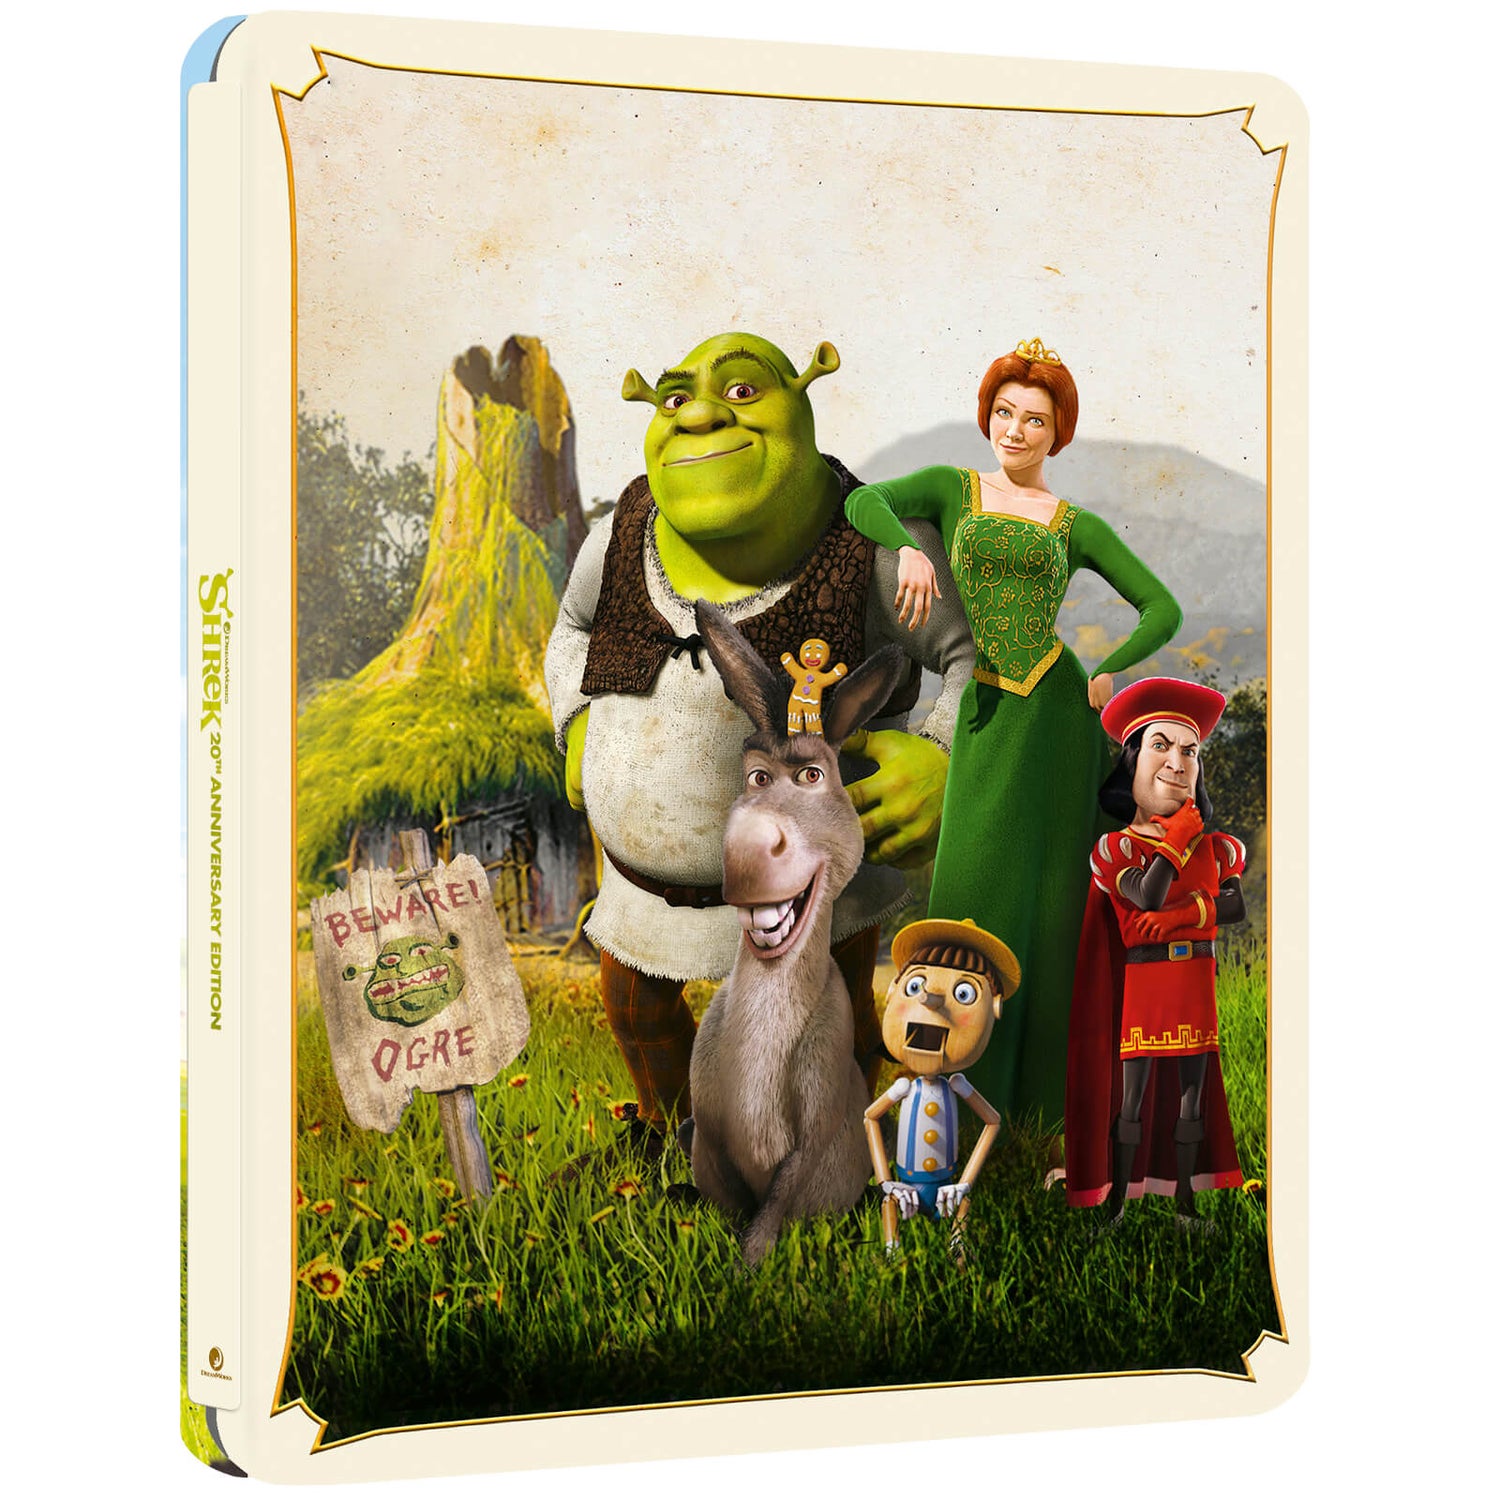 Shrek - Coffret Exclusivité Zavvi 20e anniversaire 4K Ultra HD (Blu-ray inclus)